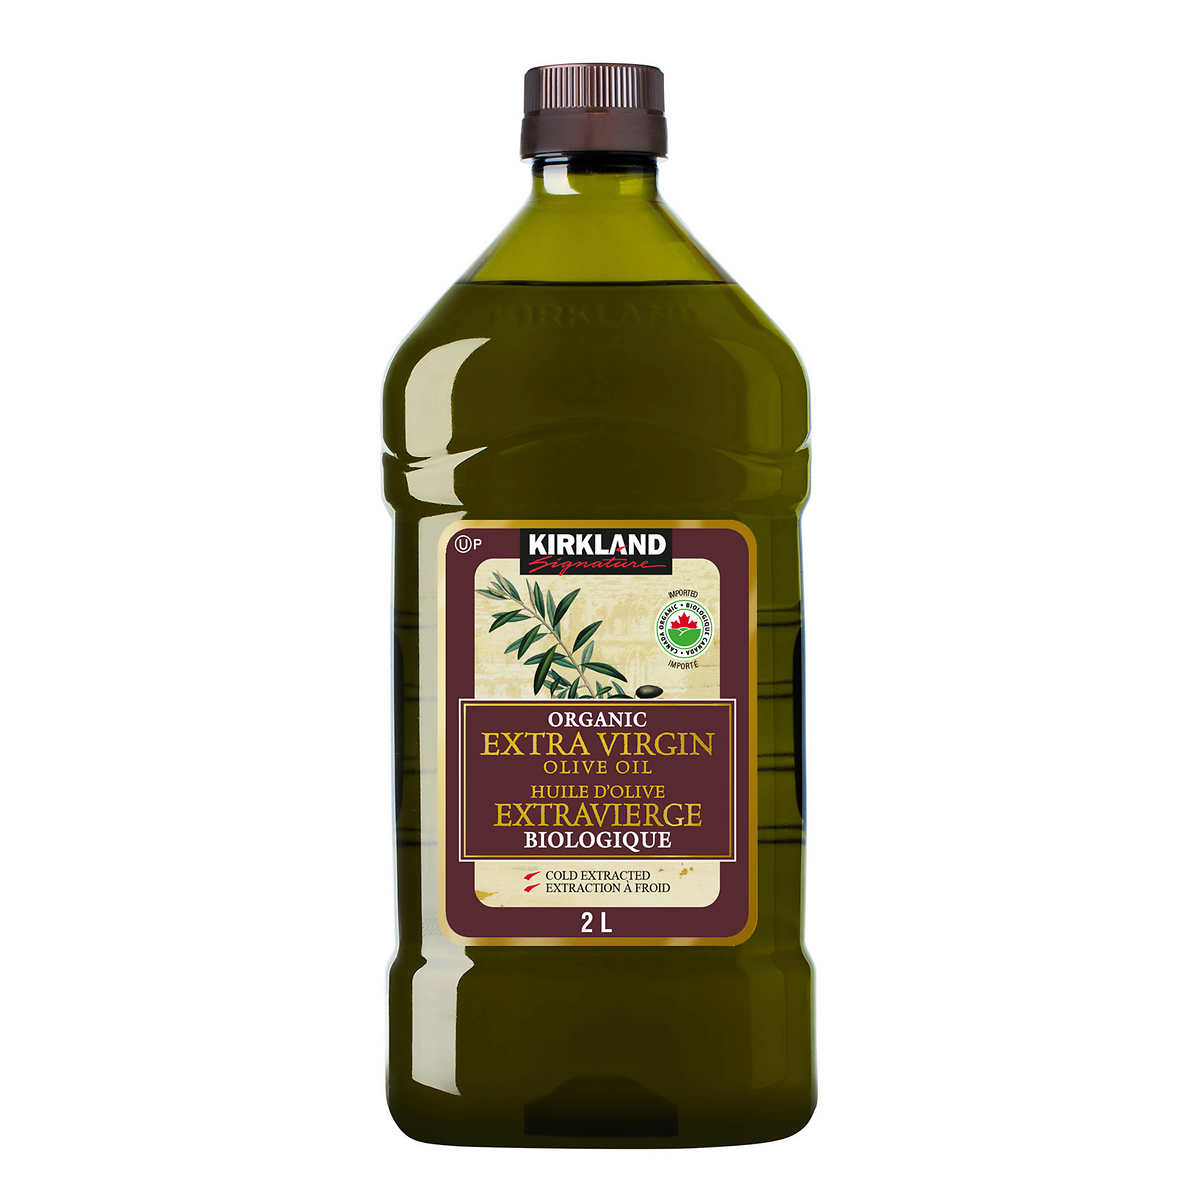 Kirkland Signature Organic Extra Virgin Olive Oil 2 L